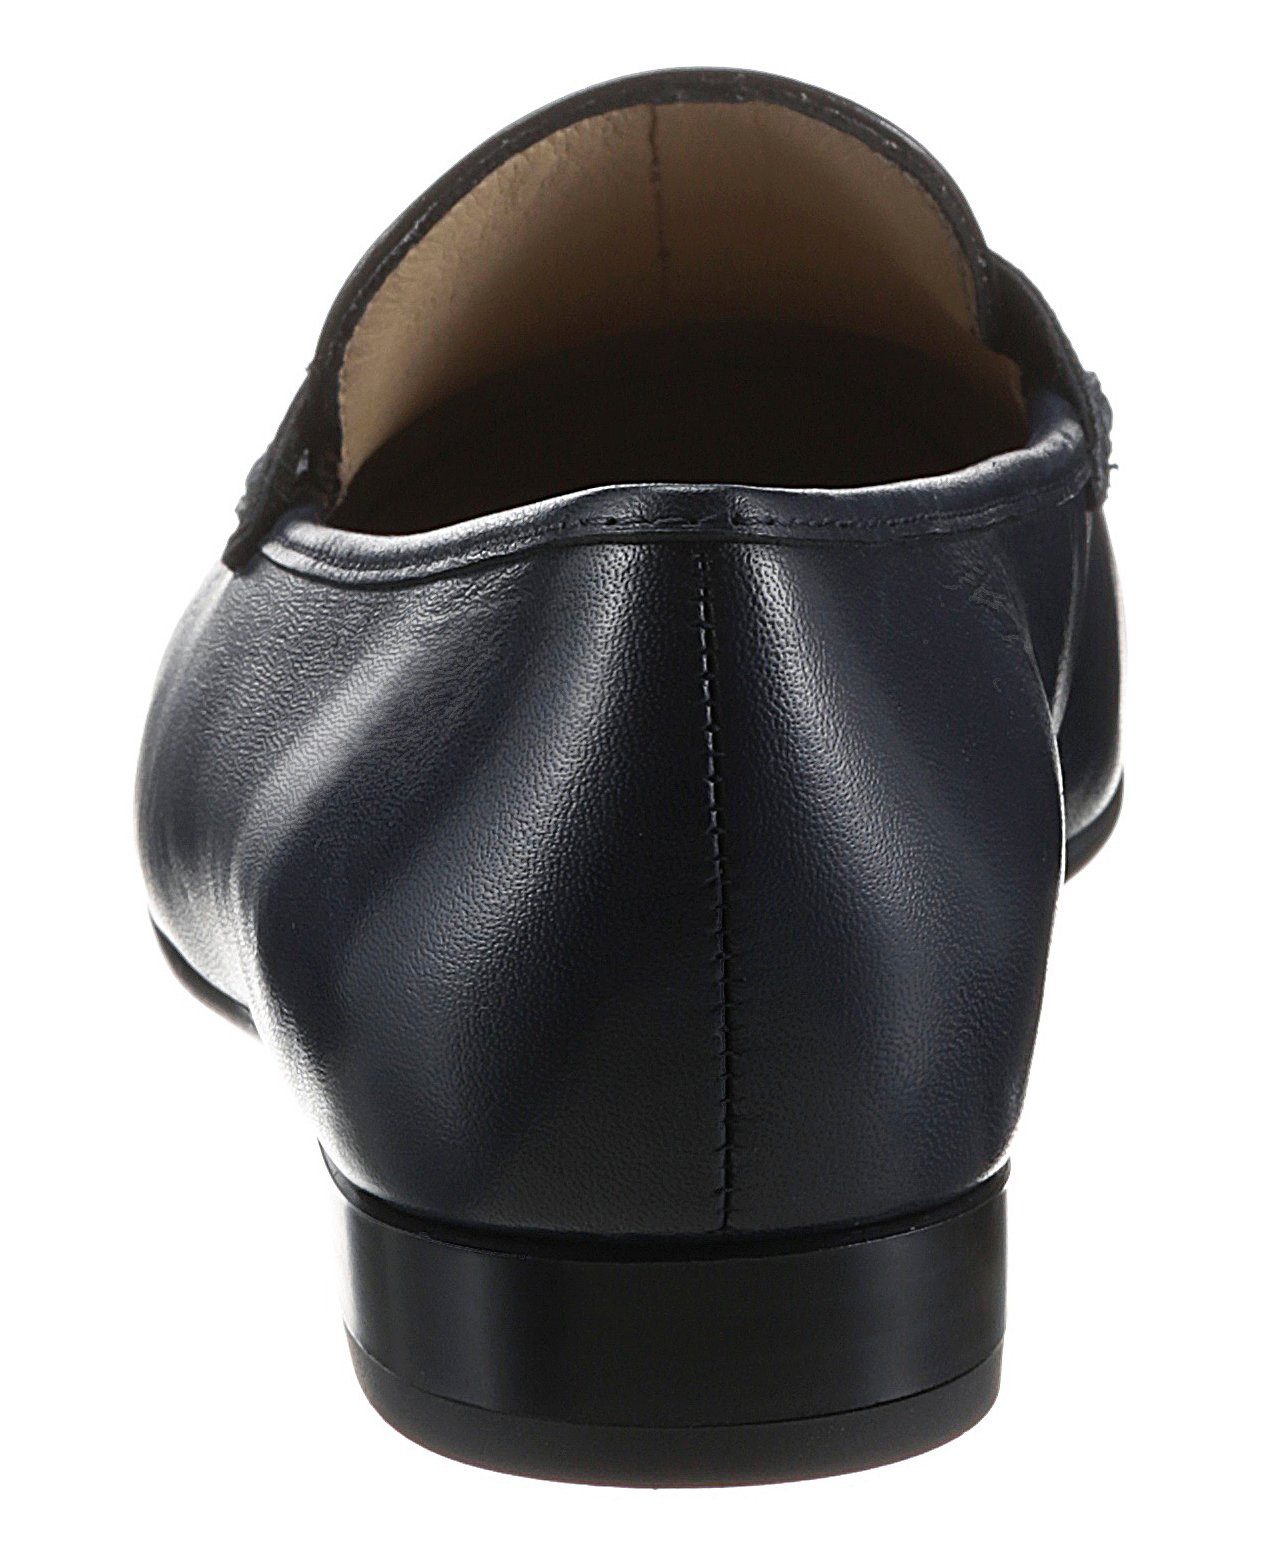 schmale eleganter KENT Ara Form, Slipper Schuhweite in dunkelblau